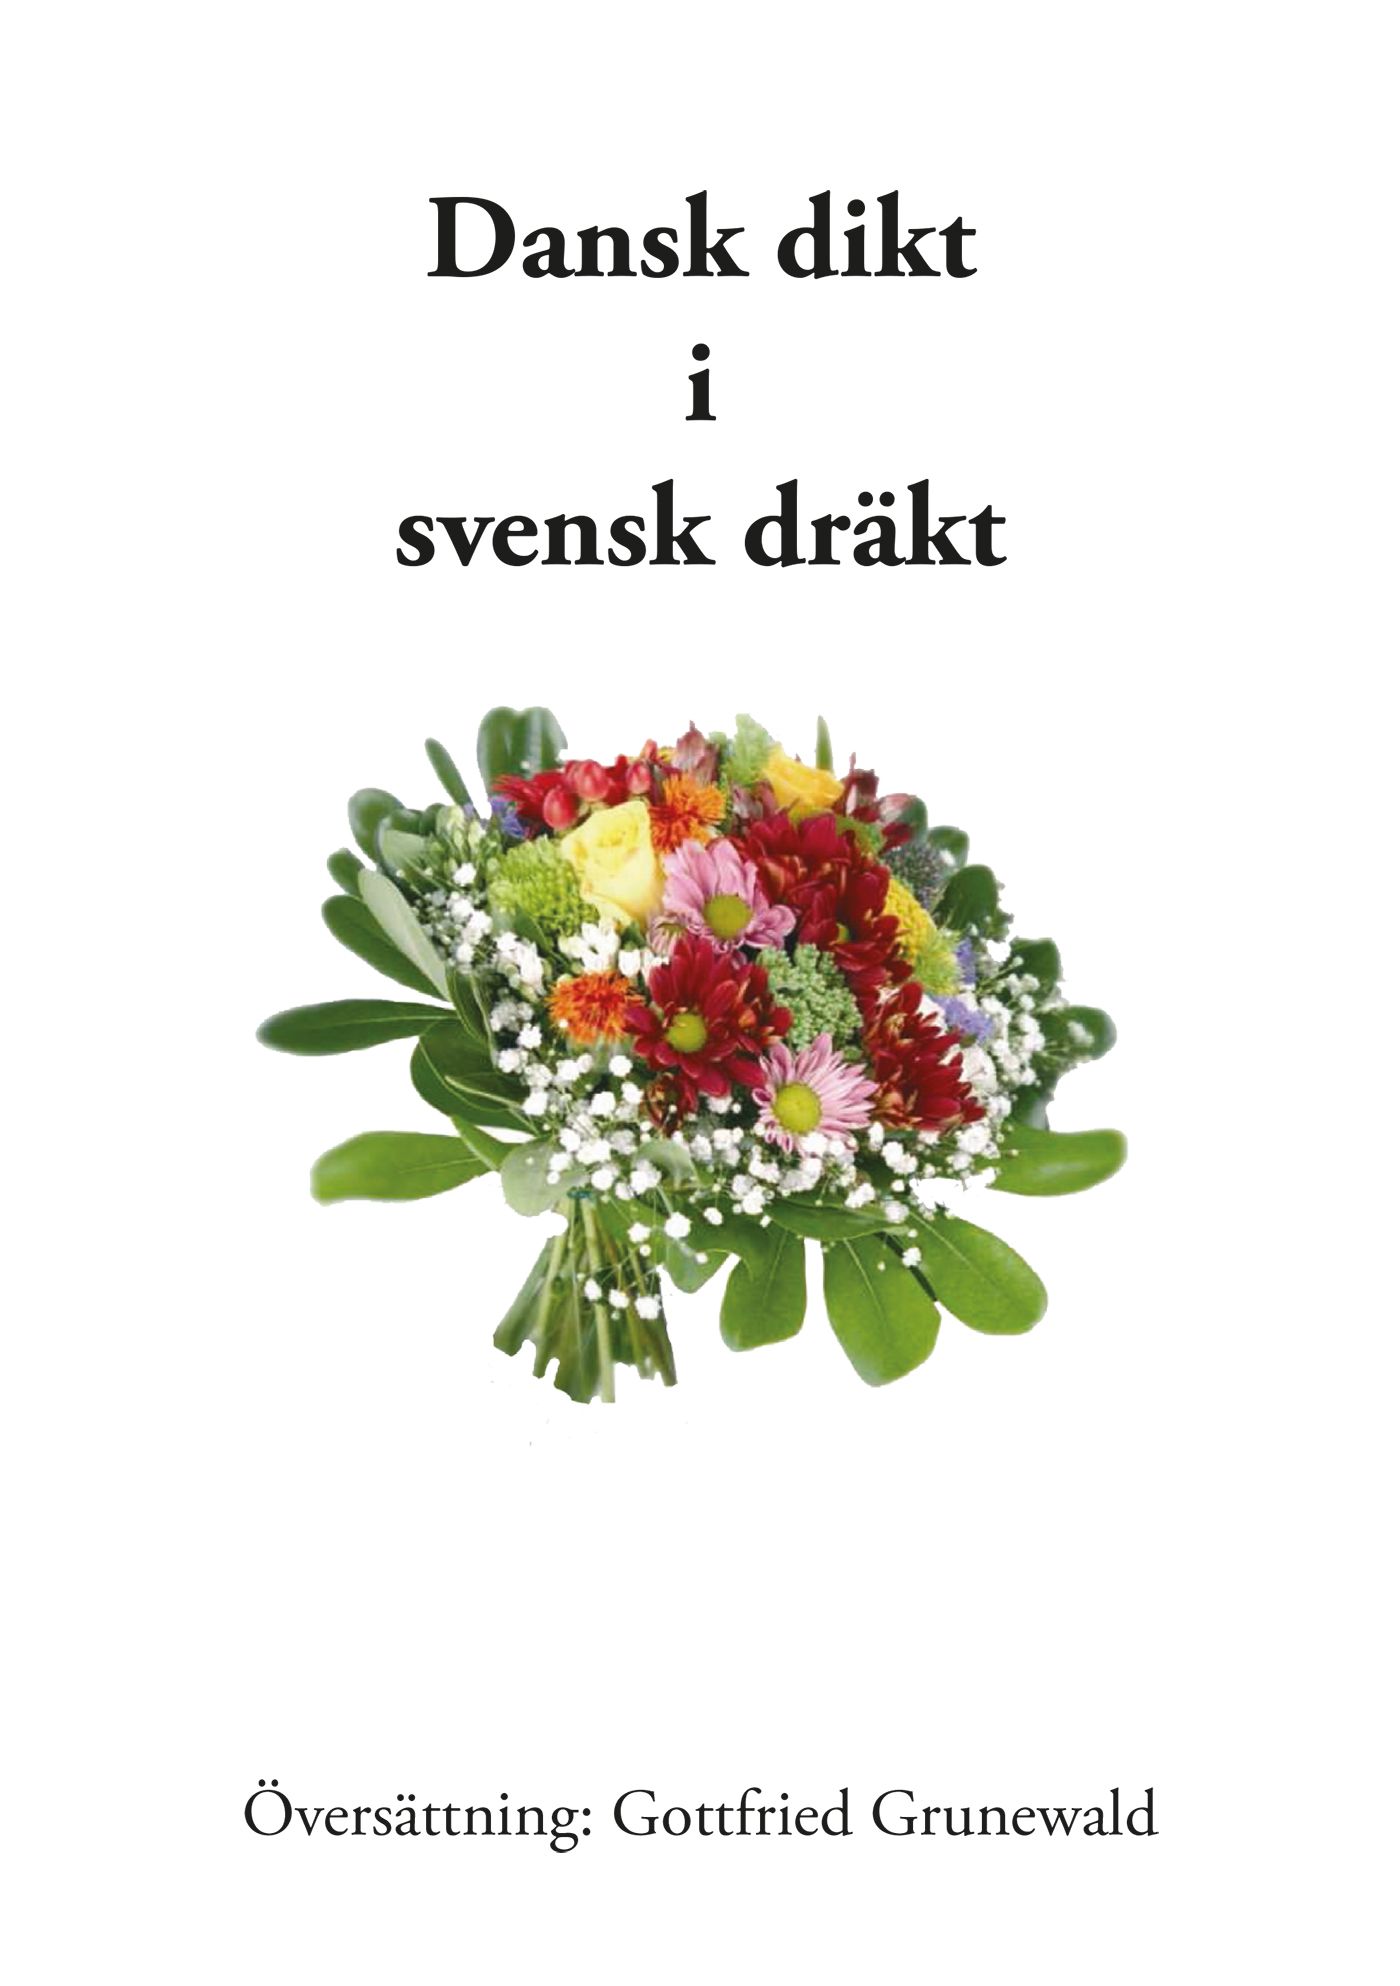 Dansk dikt i svensk dräkt, eBook by Gottfried Grunewald